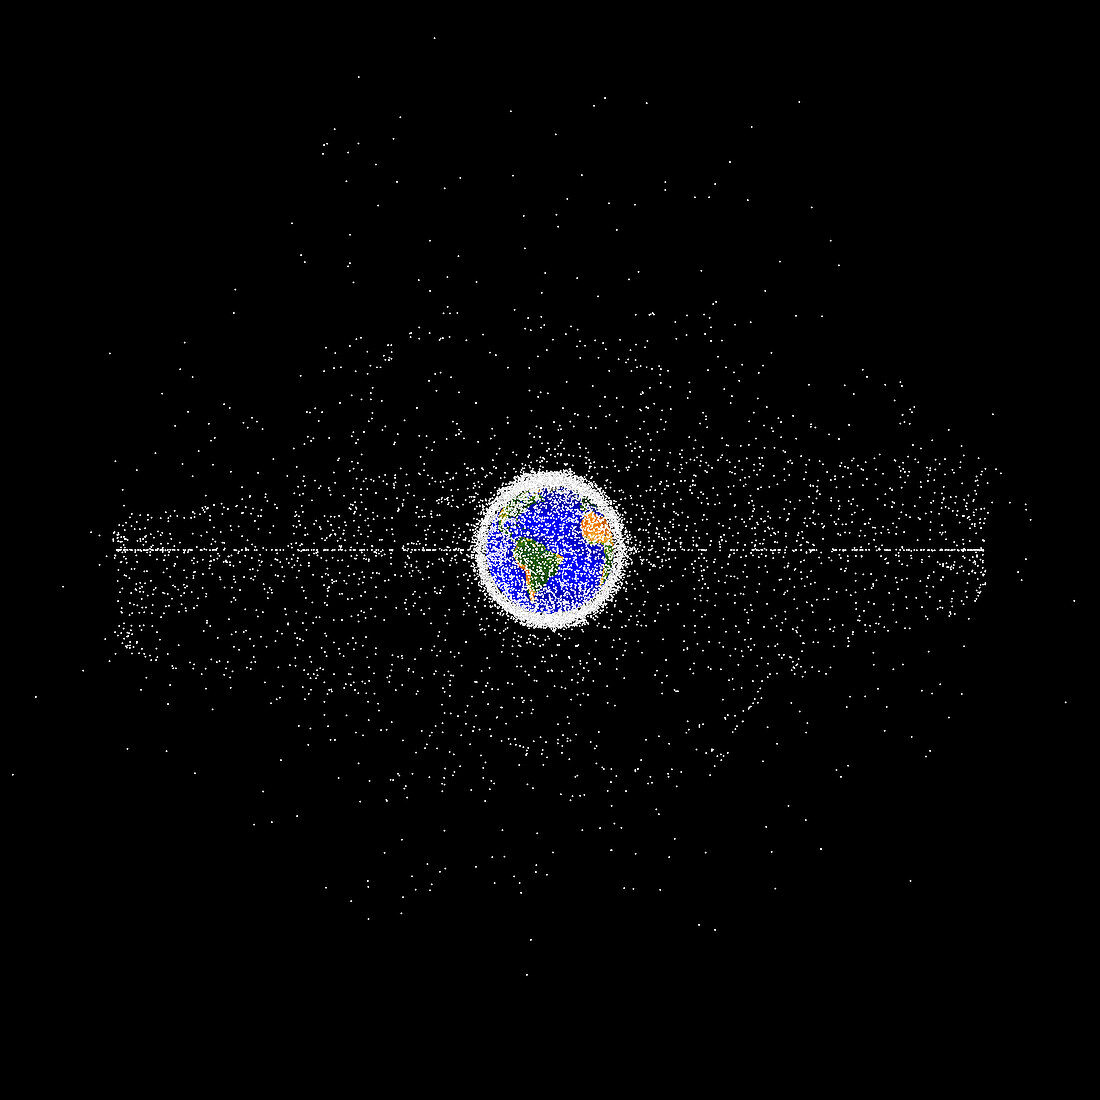 Orbital debris modelling